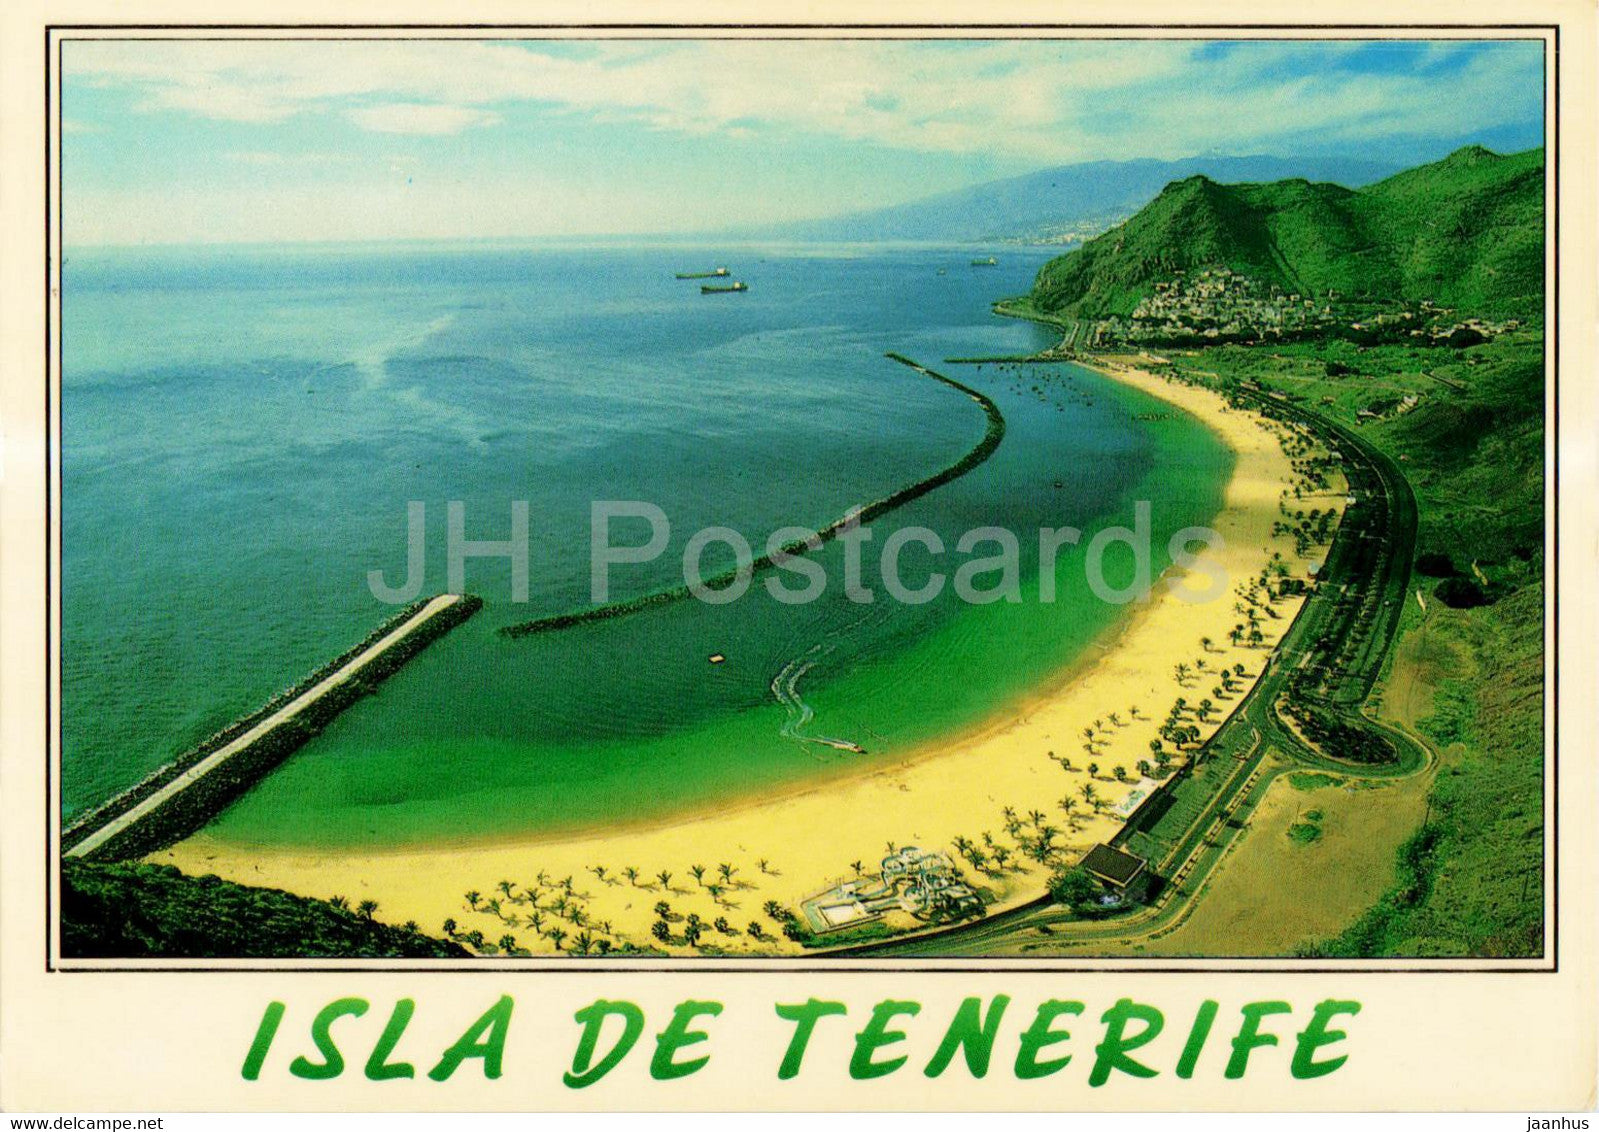 Isla de Tenerife - Playa de las Teresitas - beach - Spain - used - JH Postcards